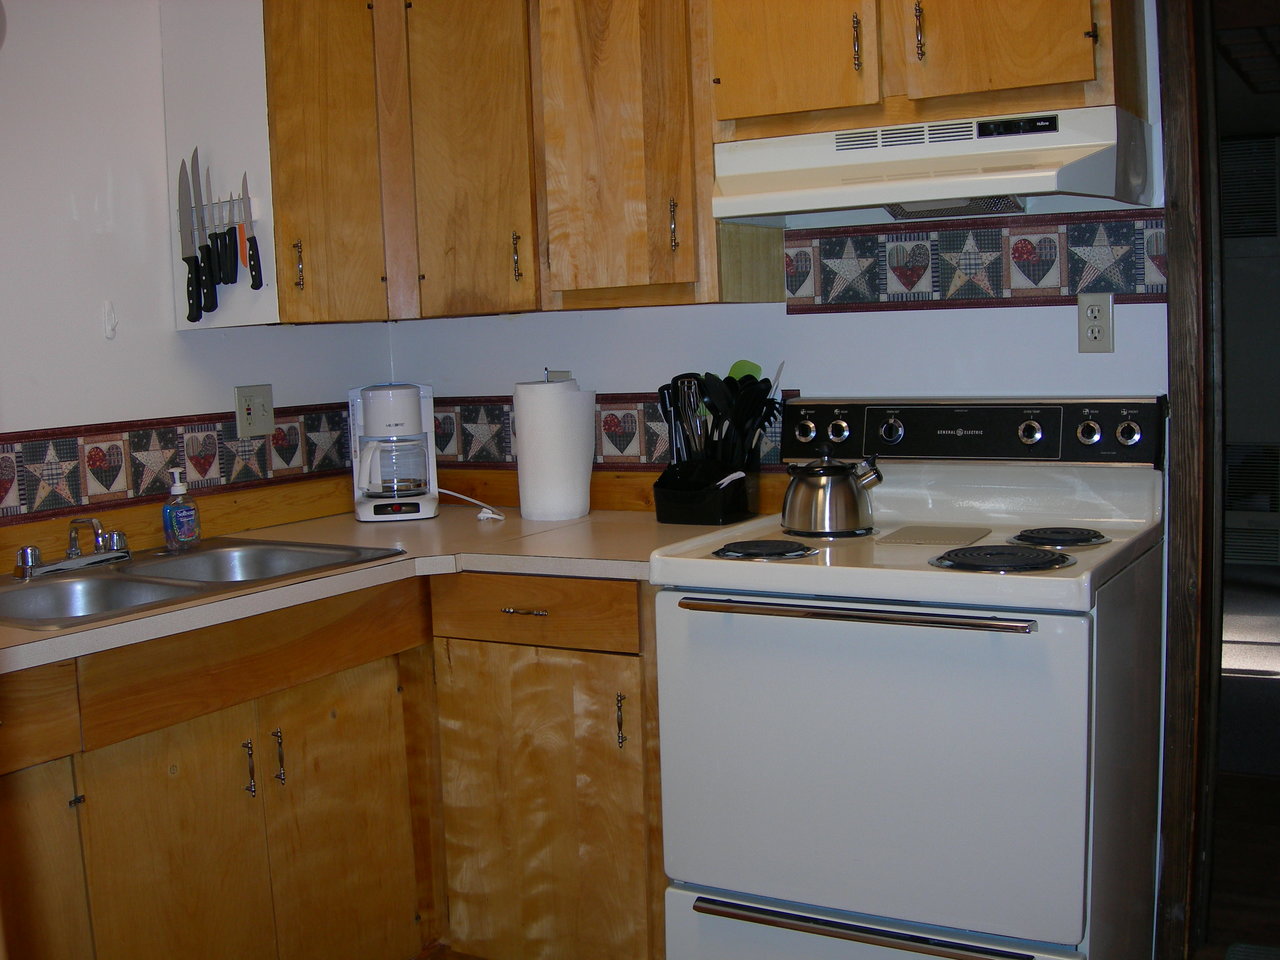 Glacier cabin kitchen area with appliances.